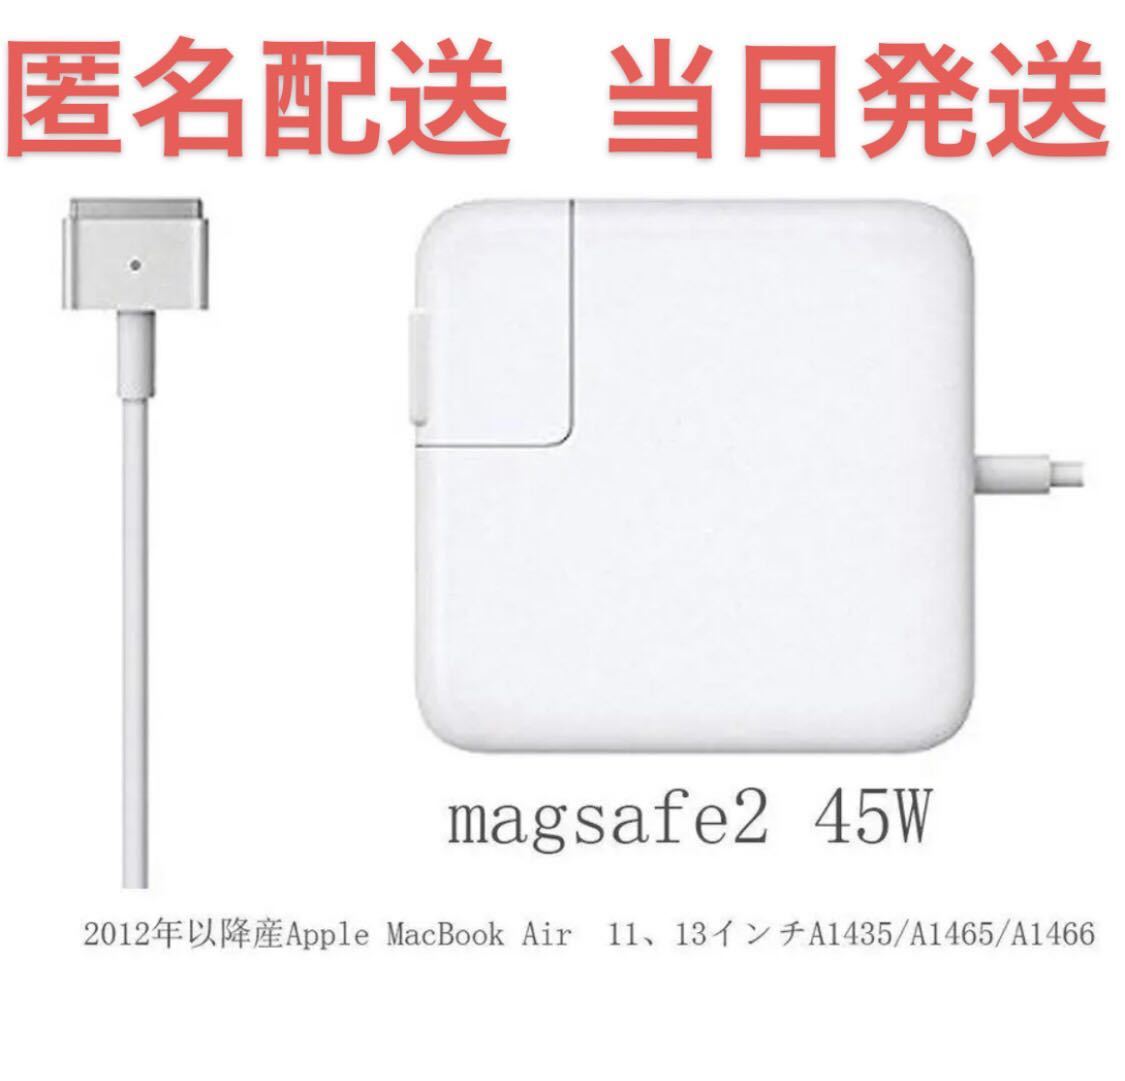 Macbook Air 電源互換アダプタ 45W MagSafe 2 T型